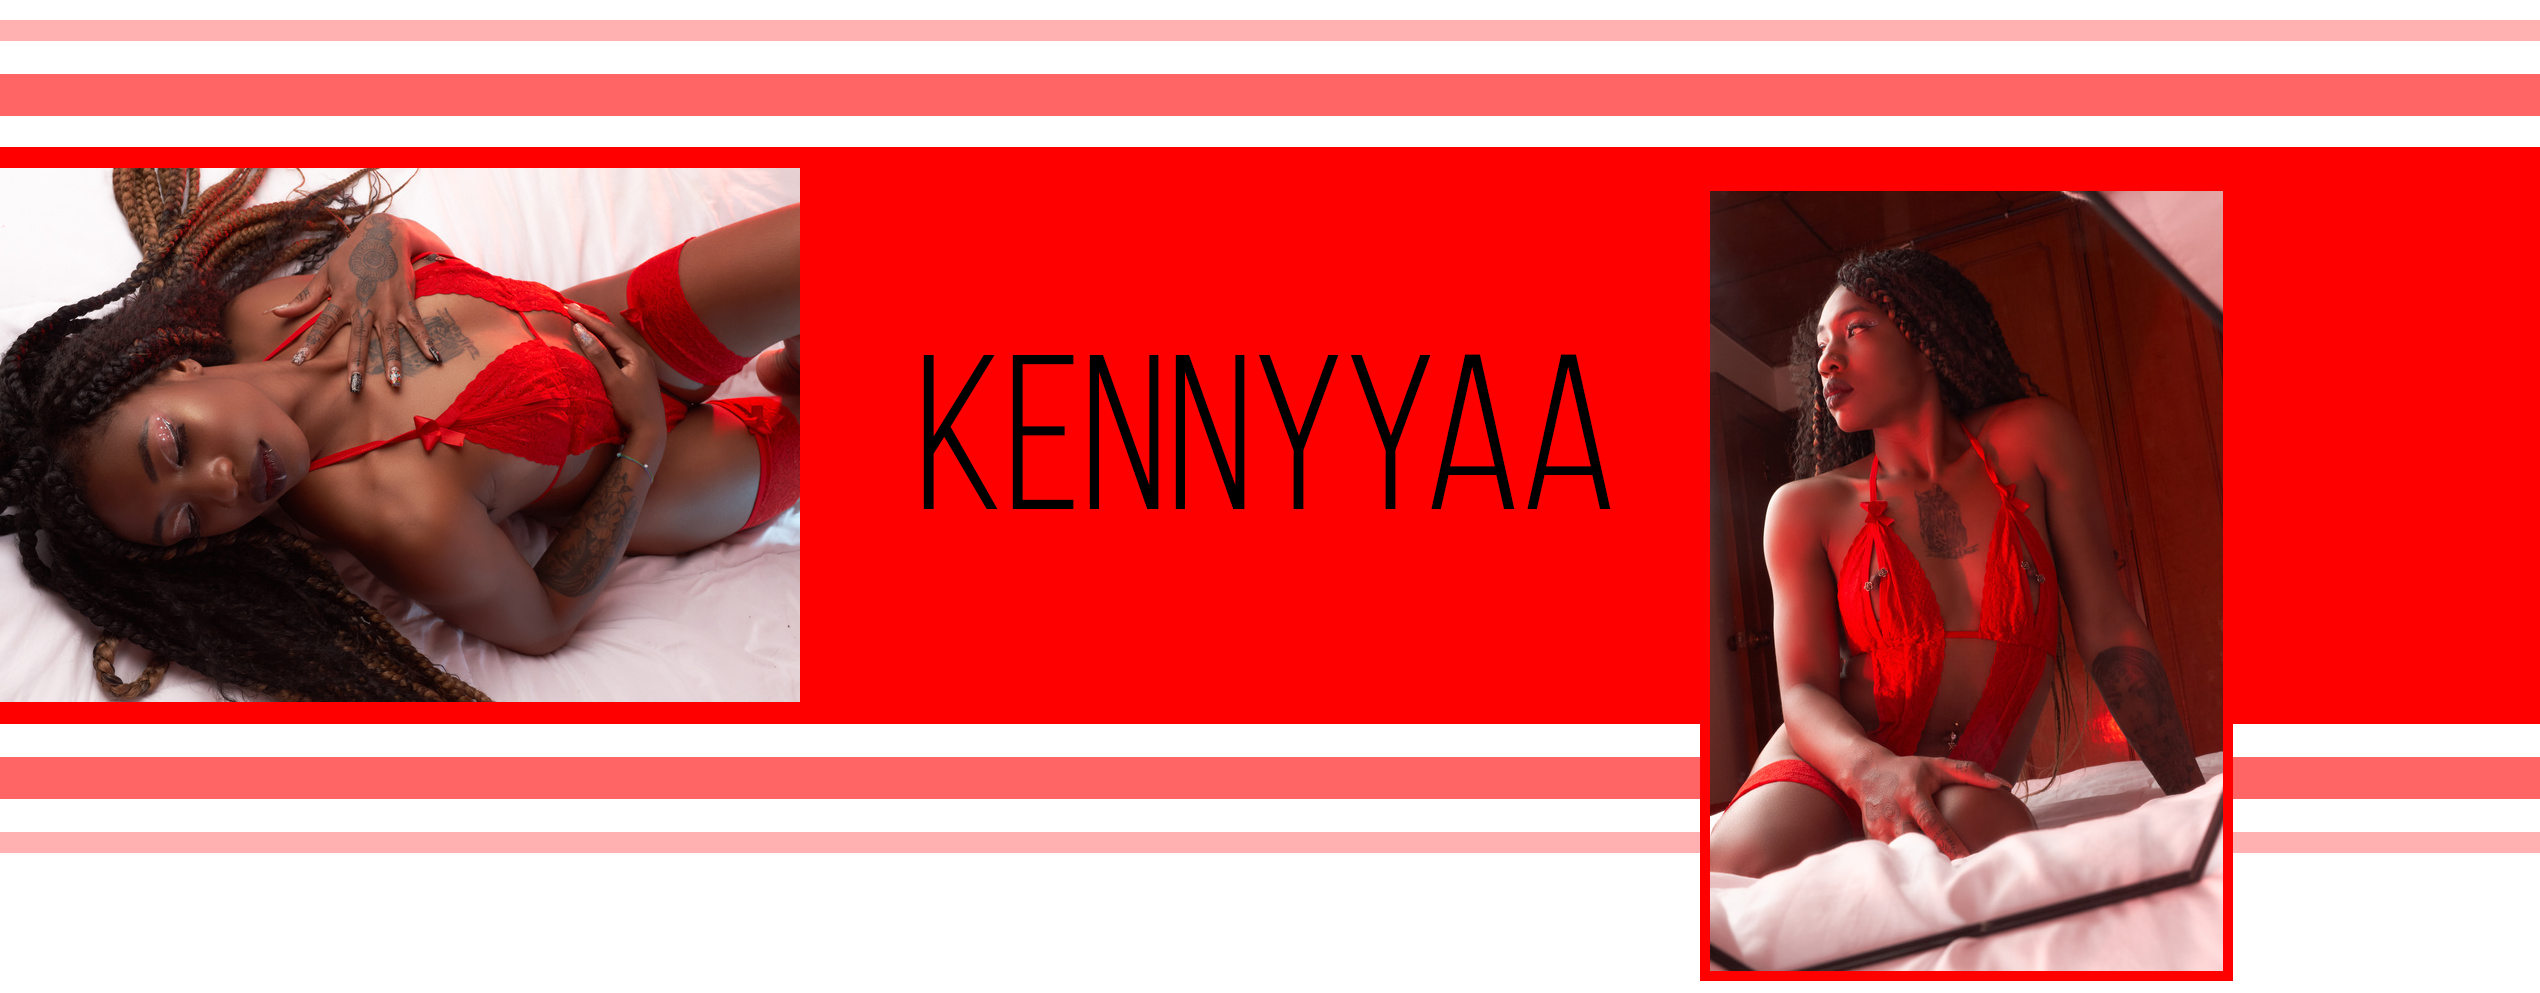 kennyyaa Hello. Let's have fun! image: 1